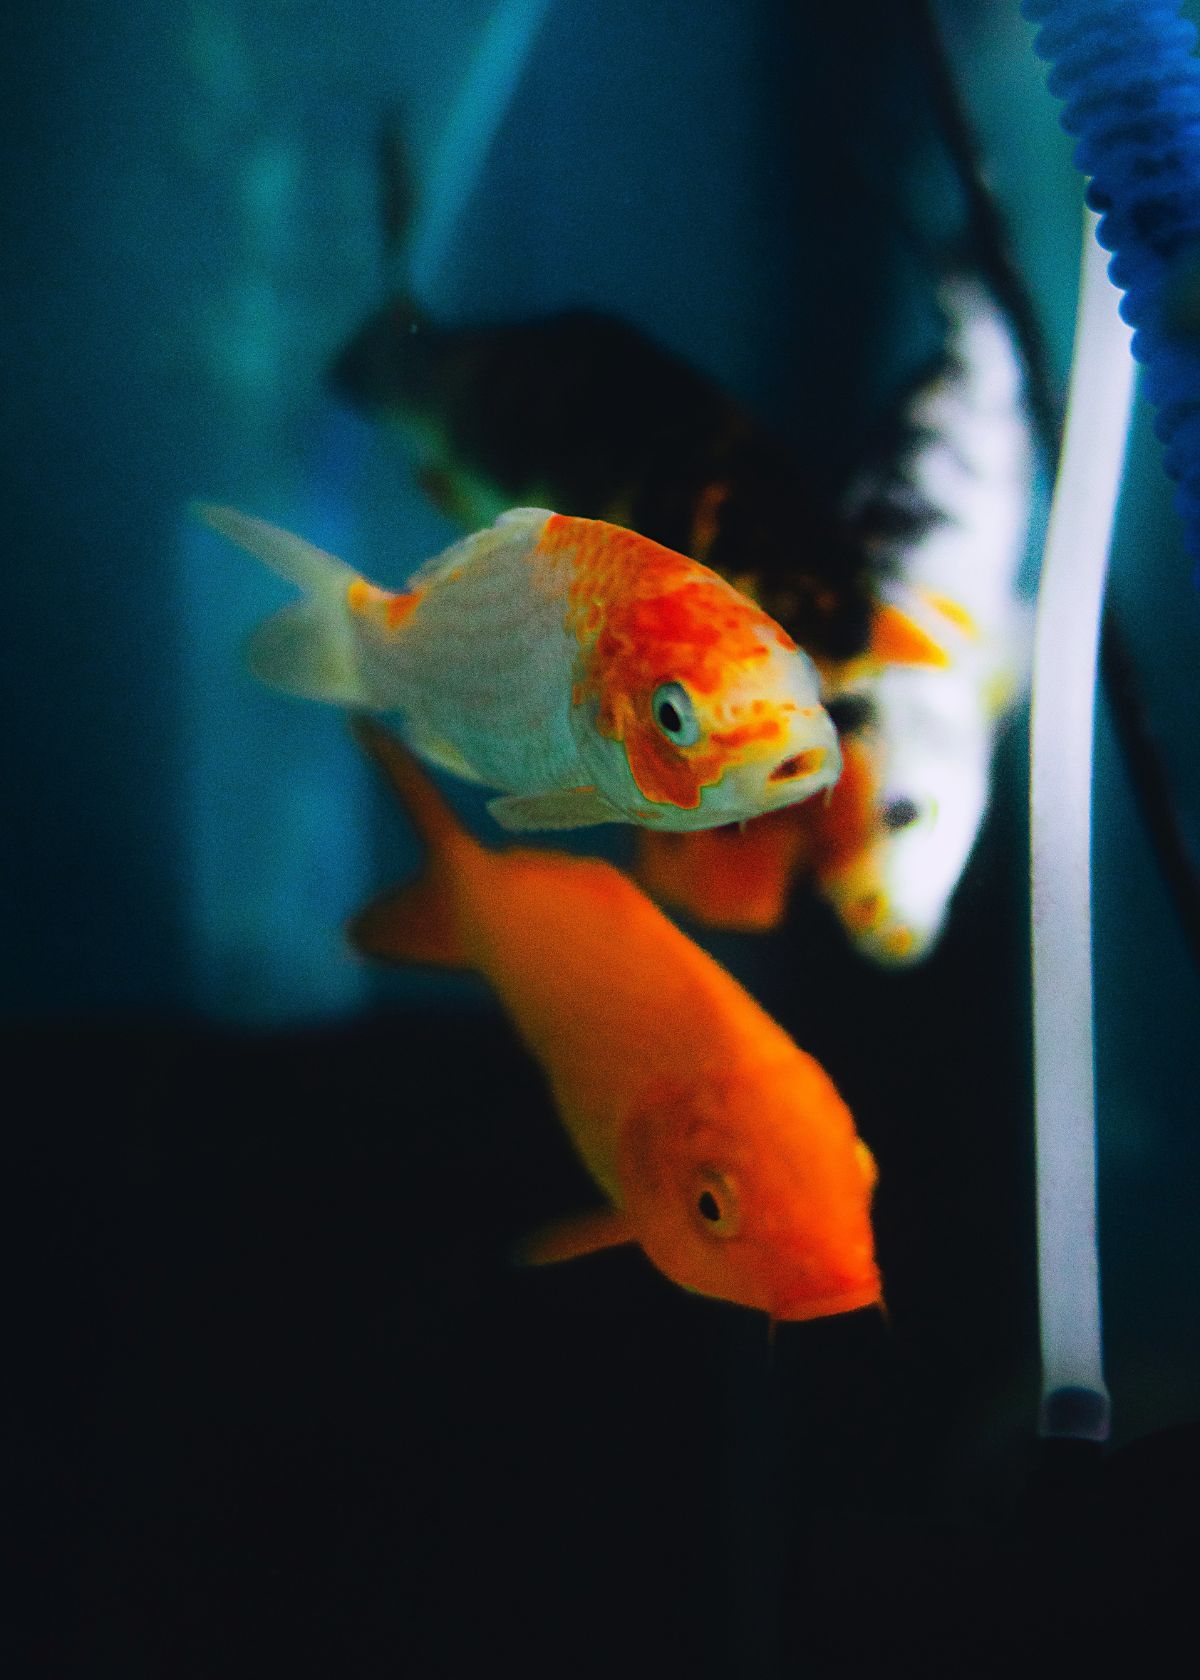 Aquarium Internal Filter